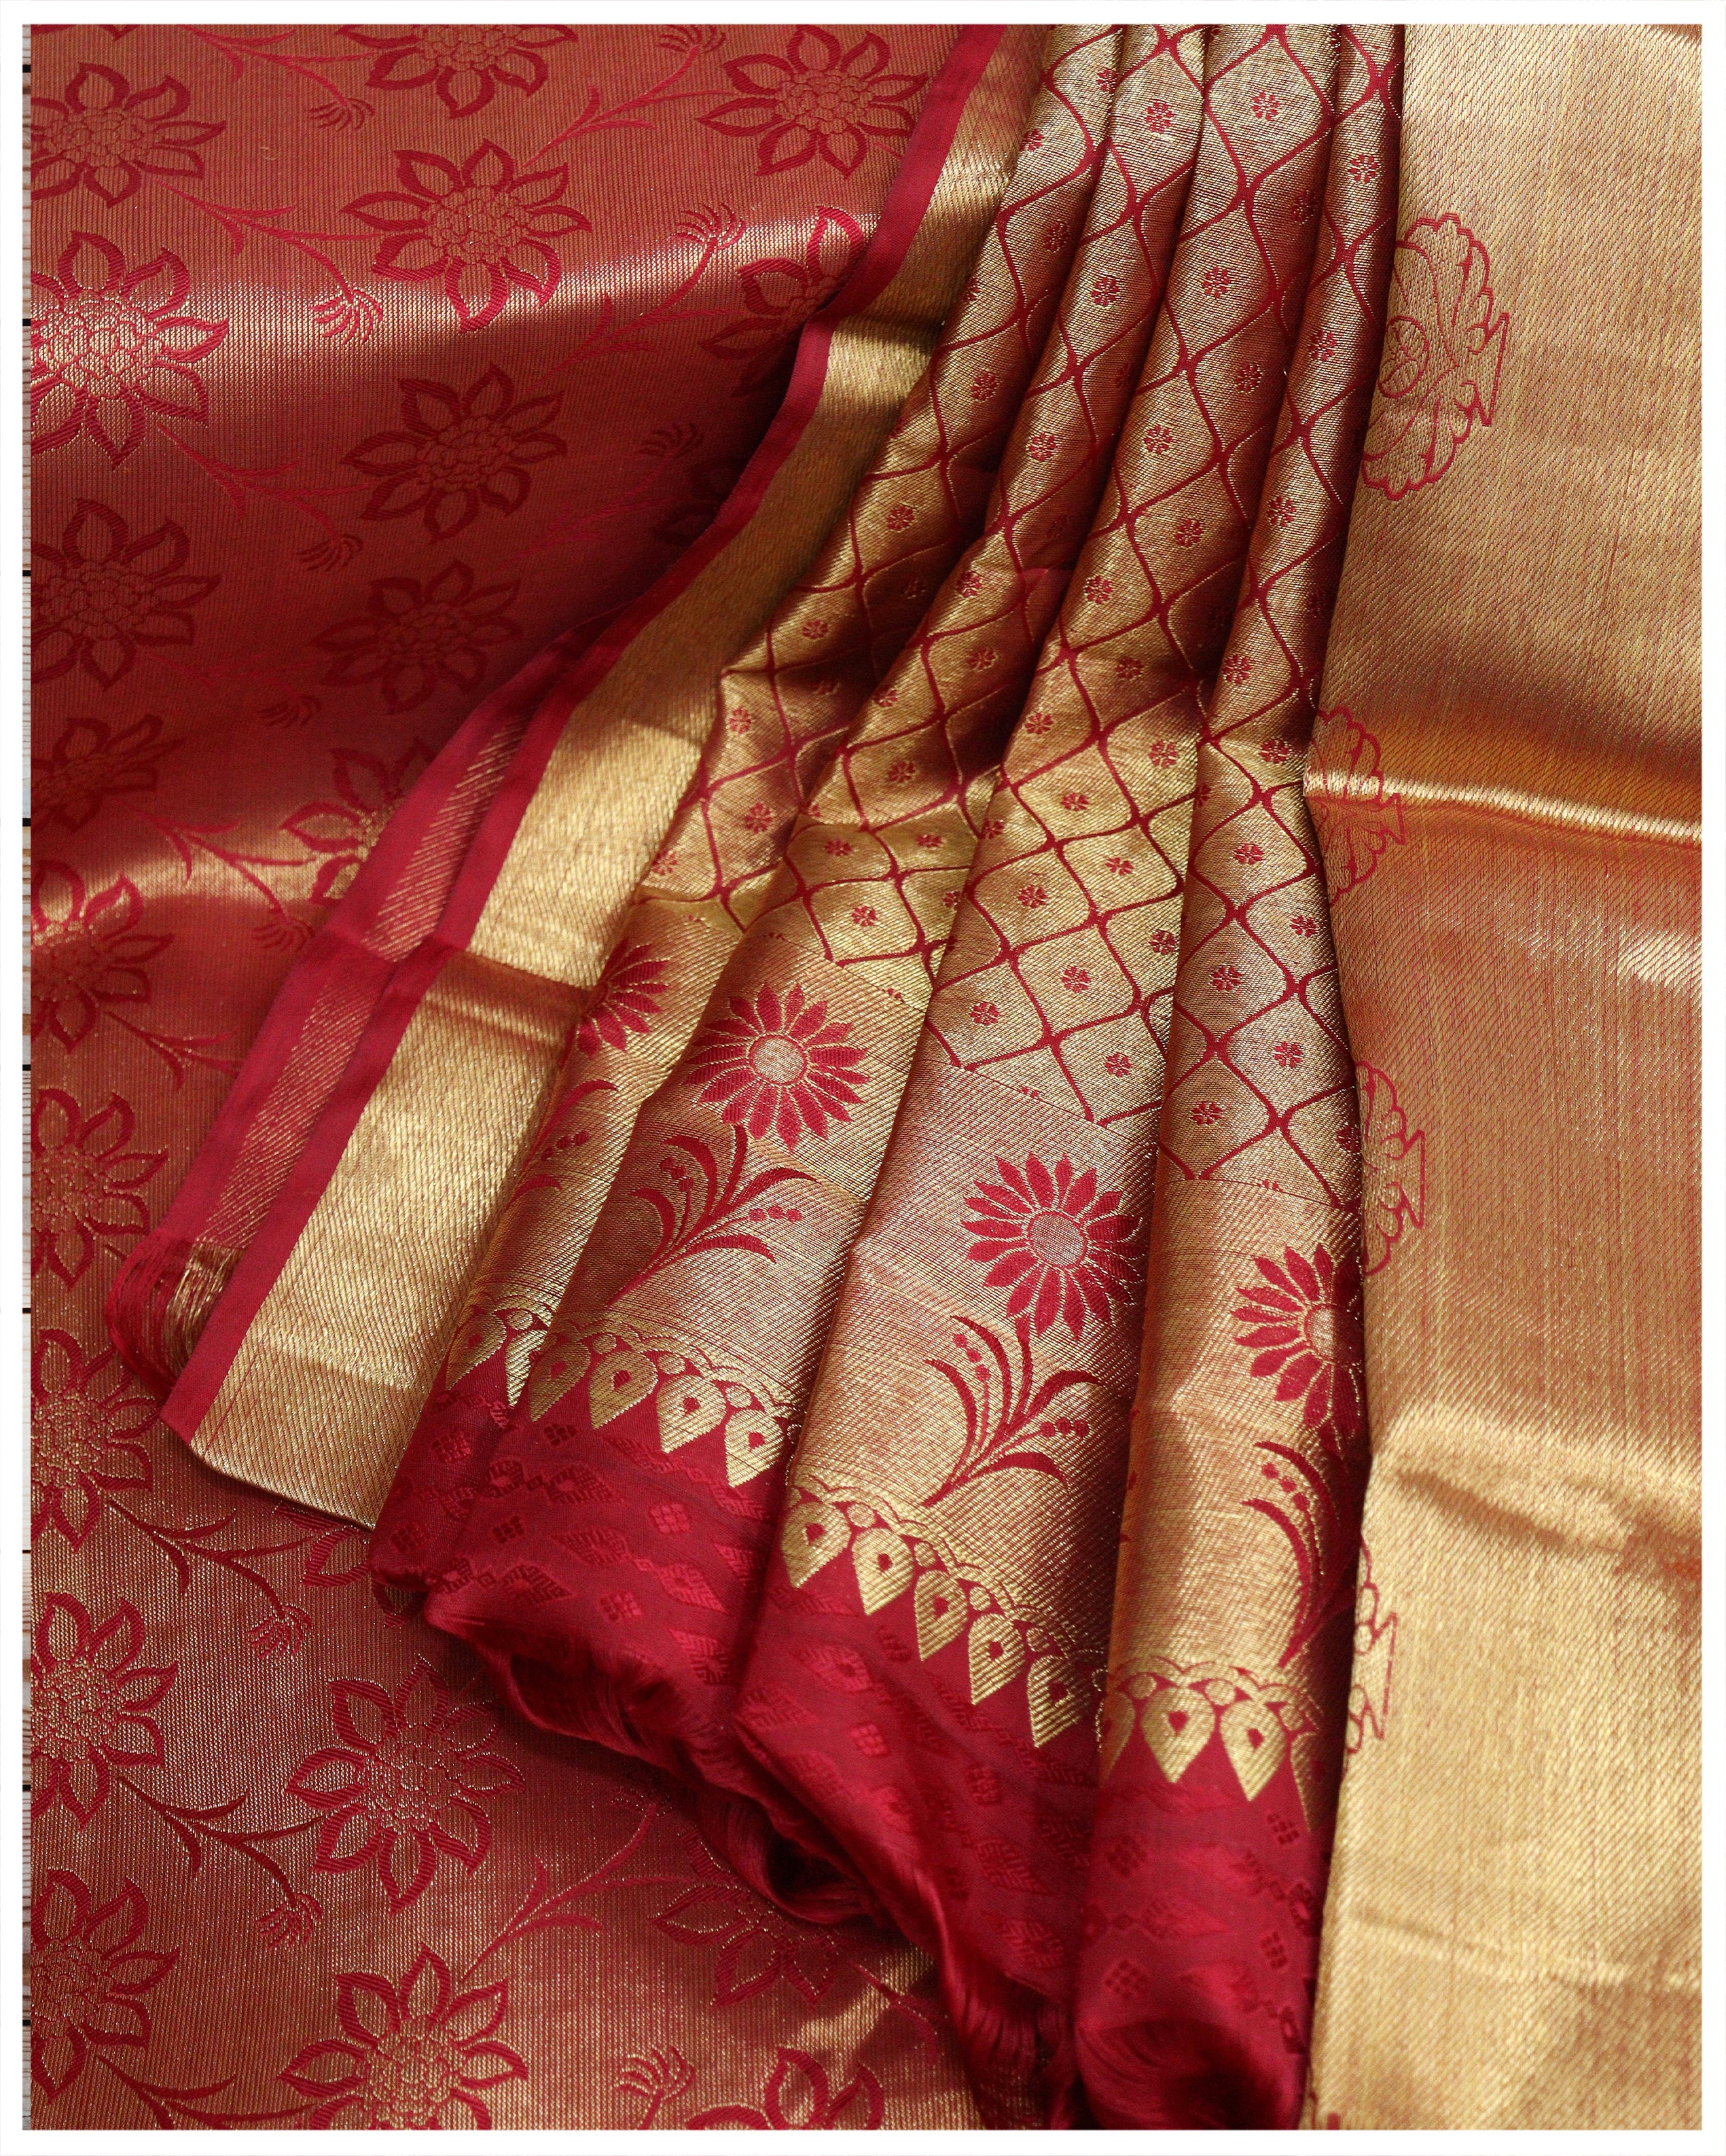 south indian wedding garland designs